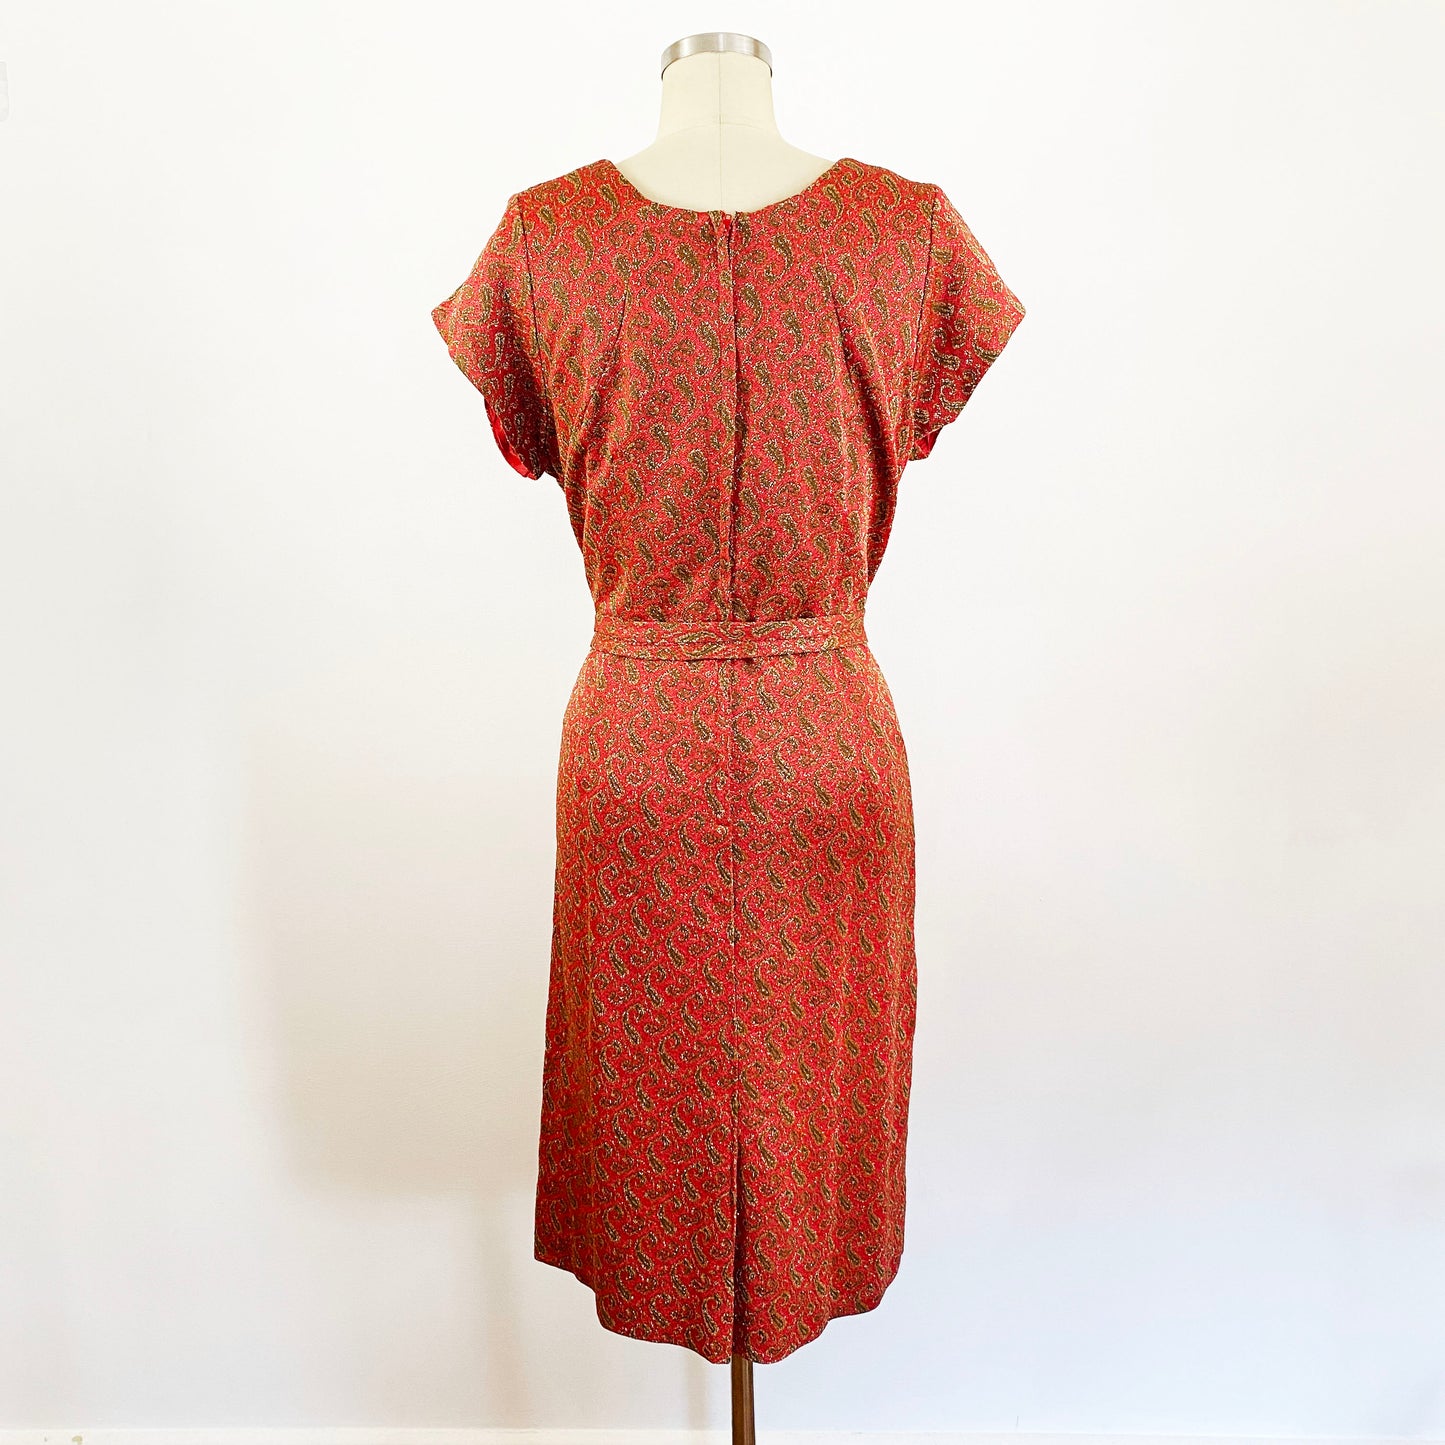 1960s Red and Gold Lurex Paisley A-line Dress Elegant Cocktail Dress Retro Party Dress / Vintage Plus Size 1X 16/18